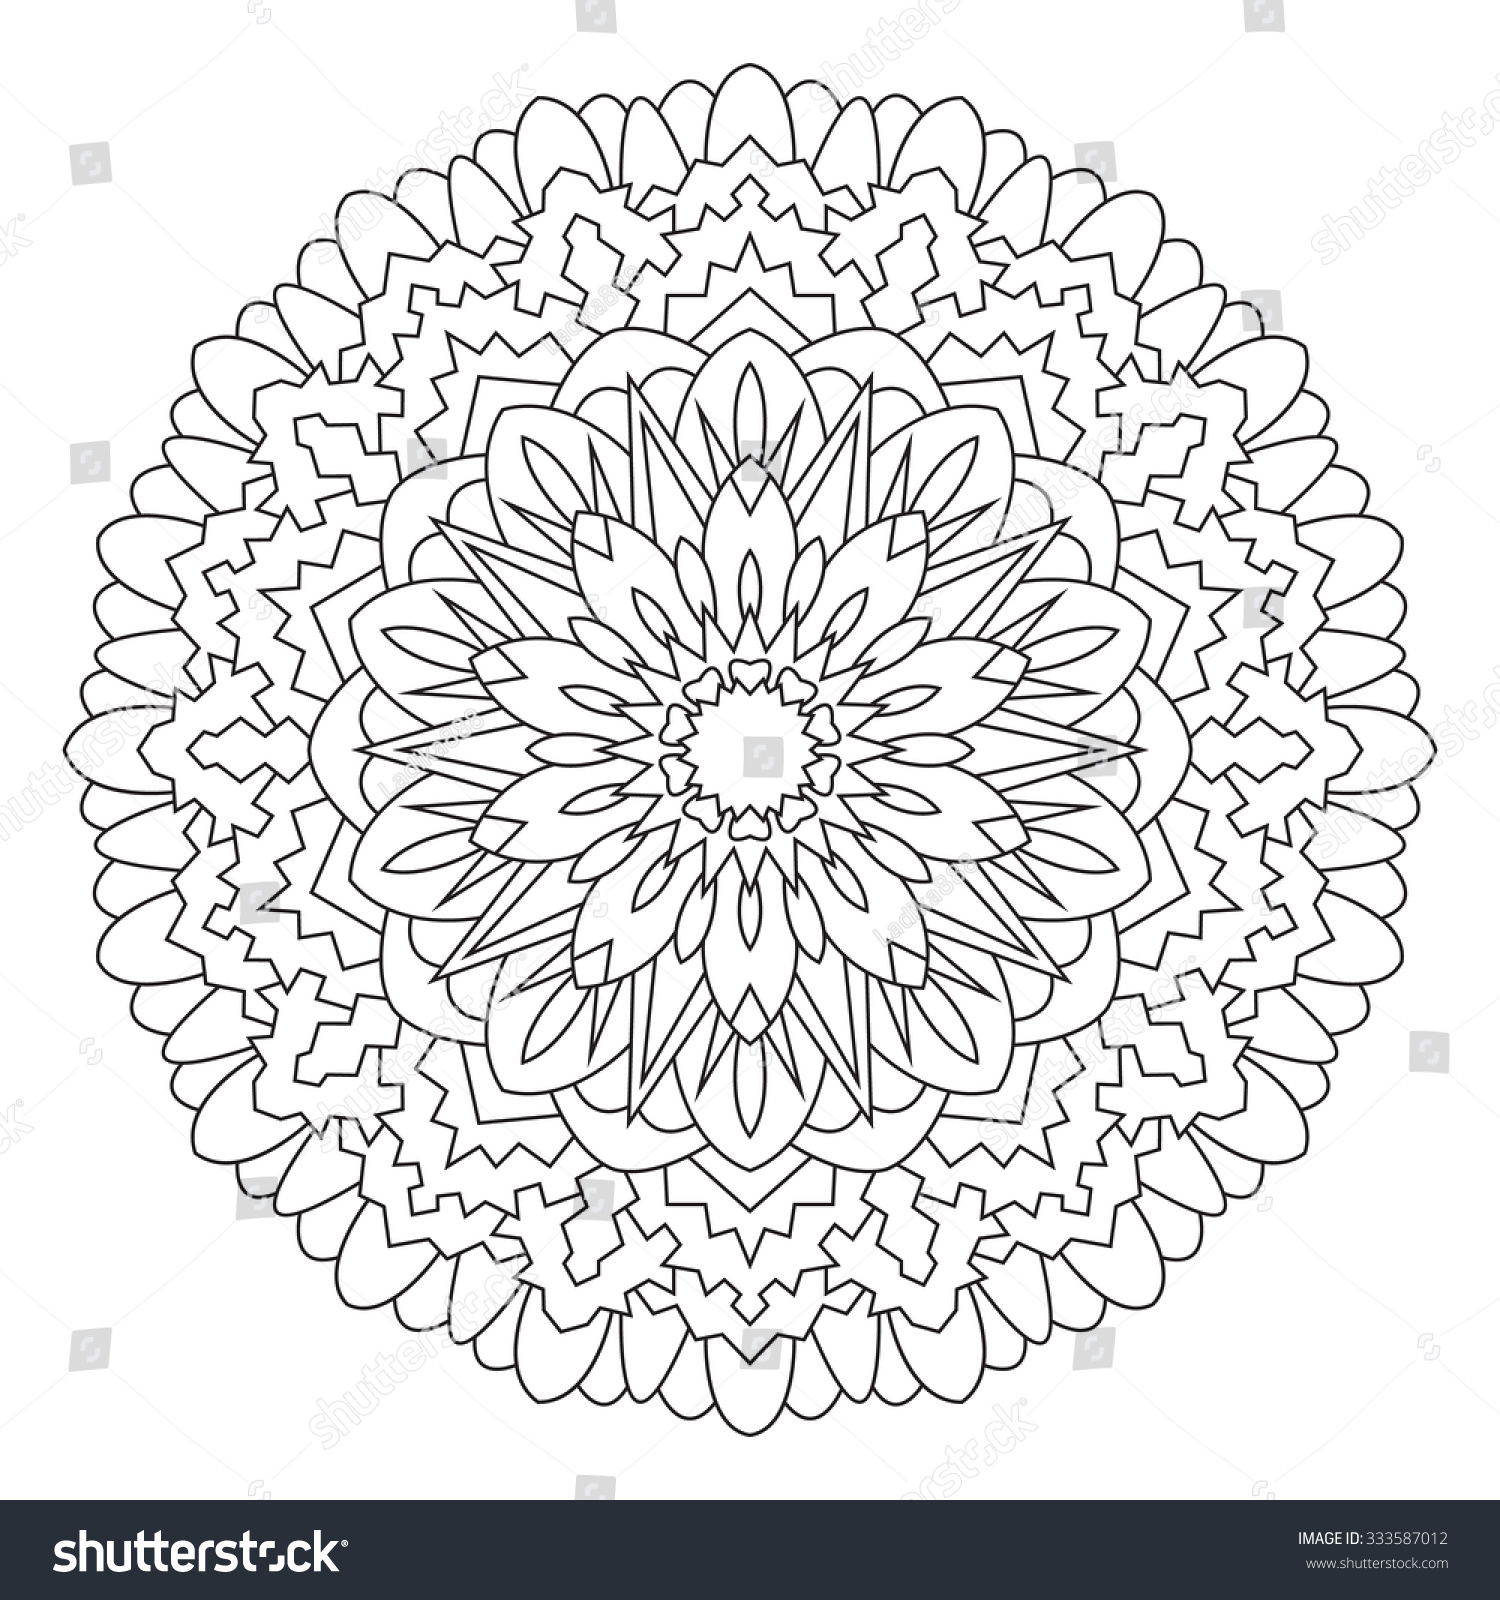 Mandala Painting Coloring Circular Symmetrical Pattern Stock ...